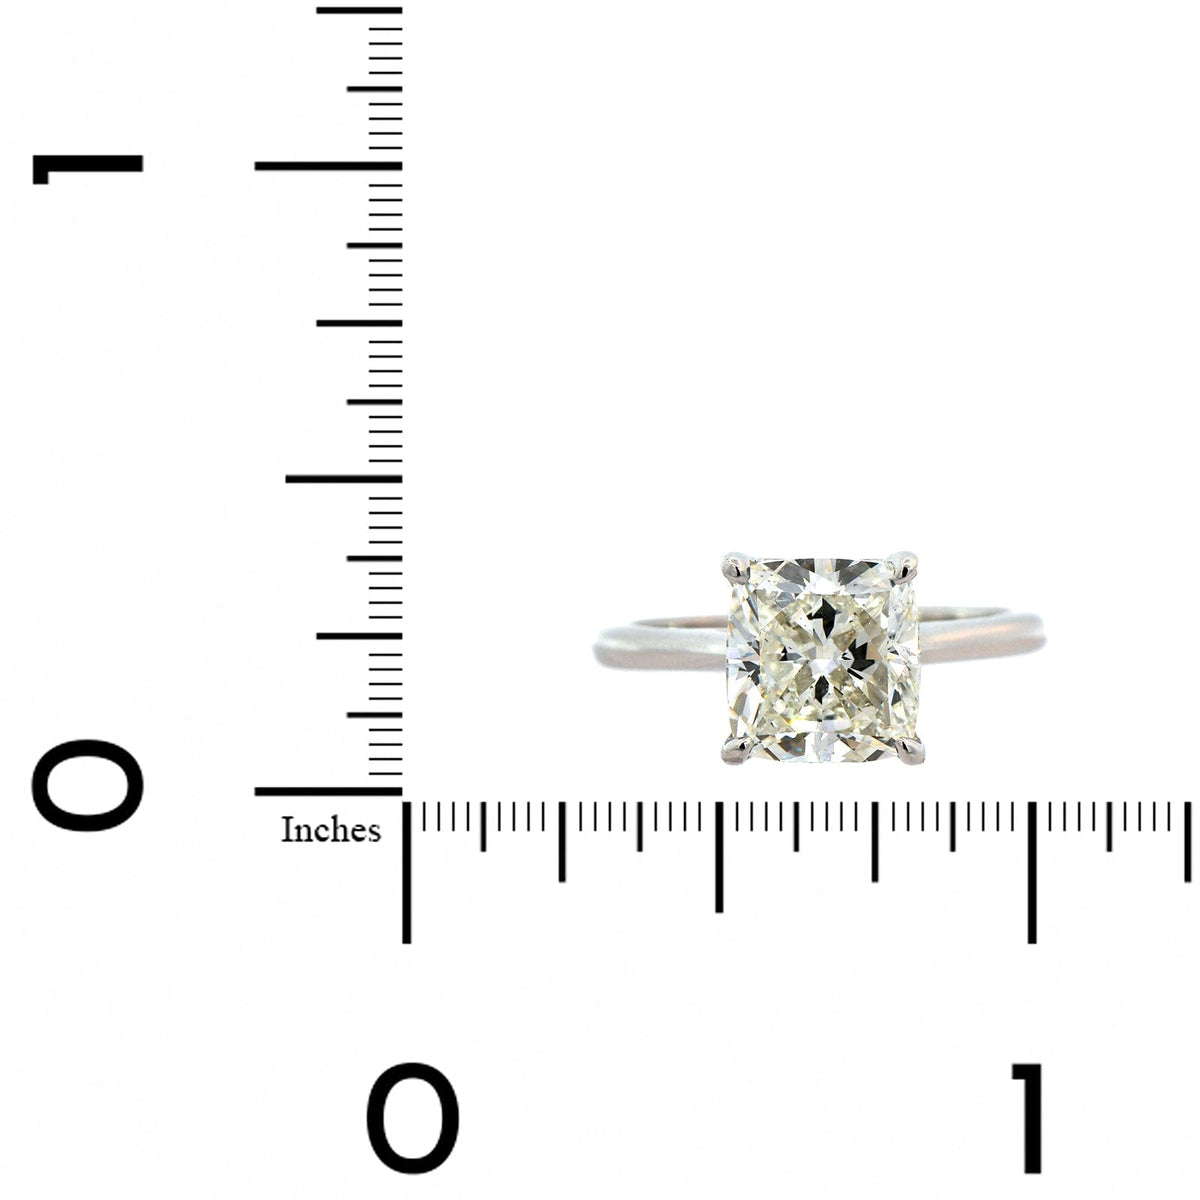 Platinum Cushion Cut Diamond Engagement Ring